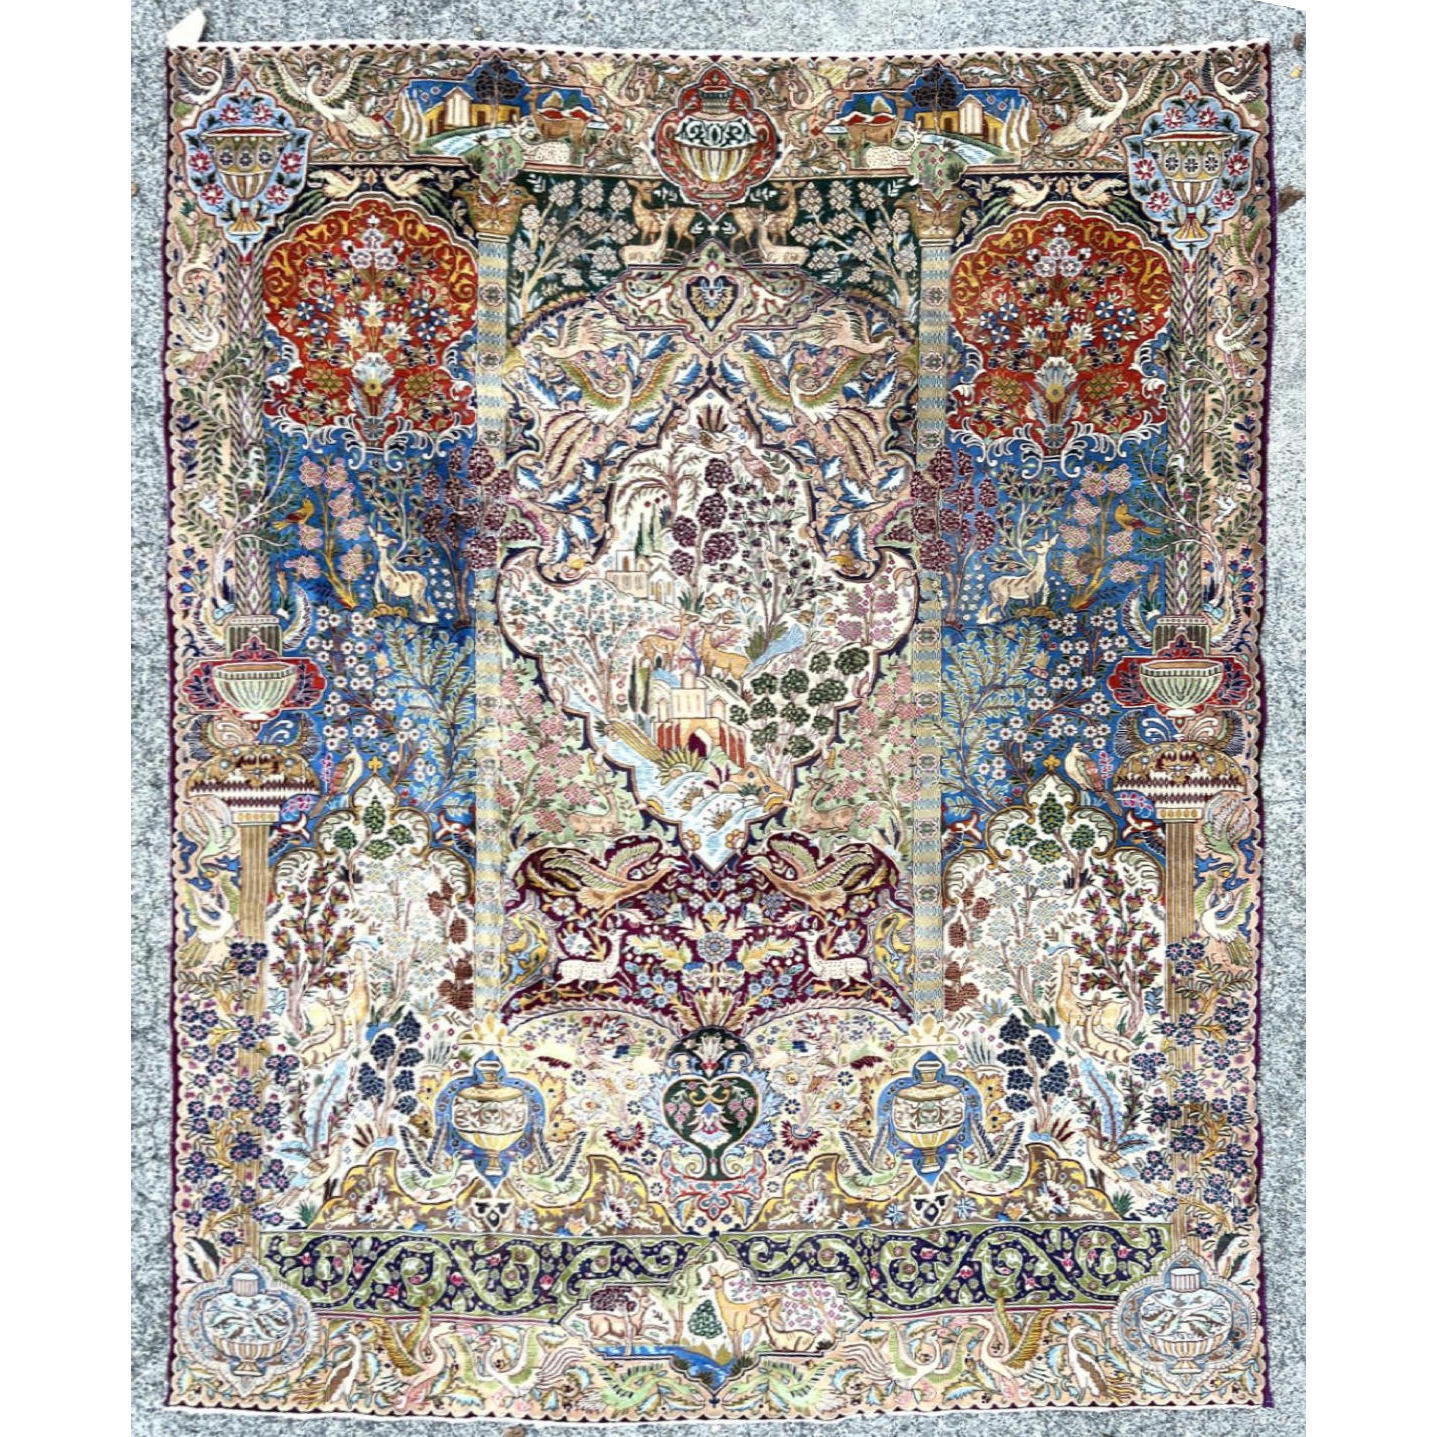 12 9 x 9 8 Handmade Oriental Carpet 2b92c7